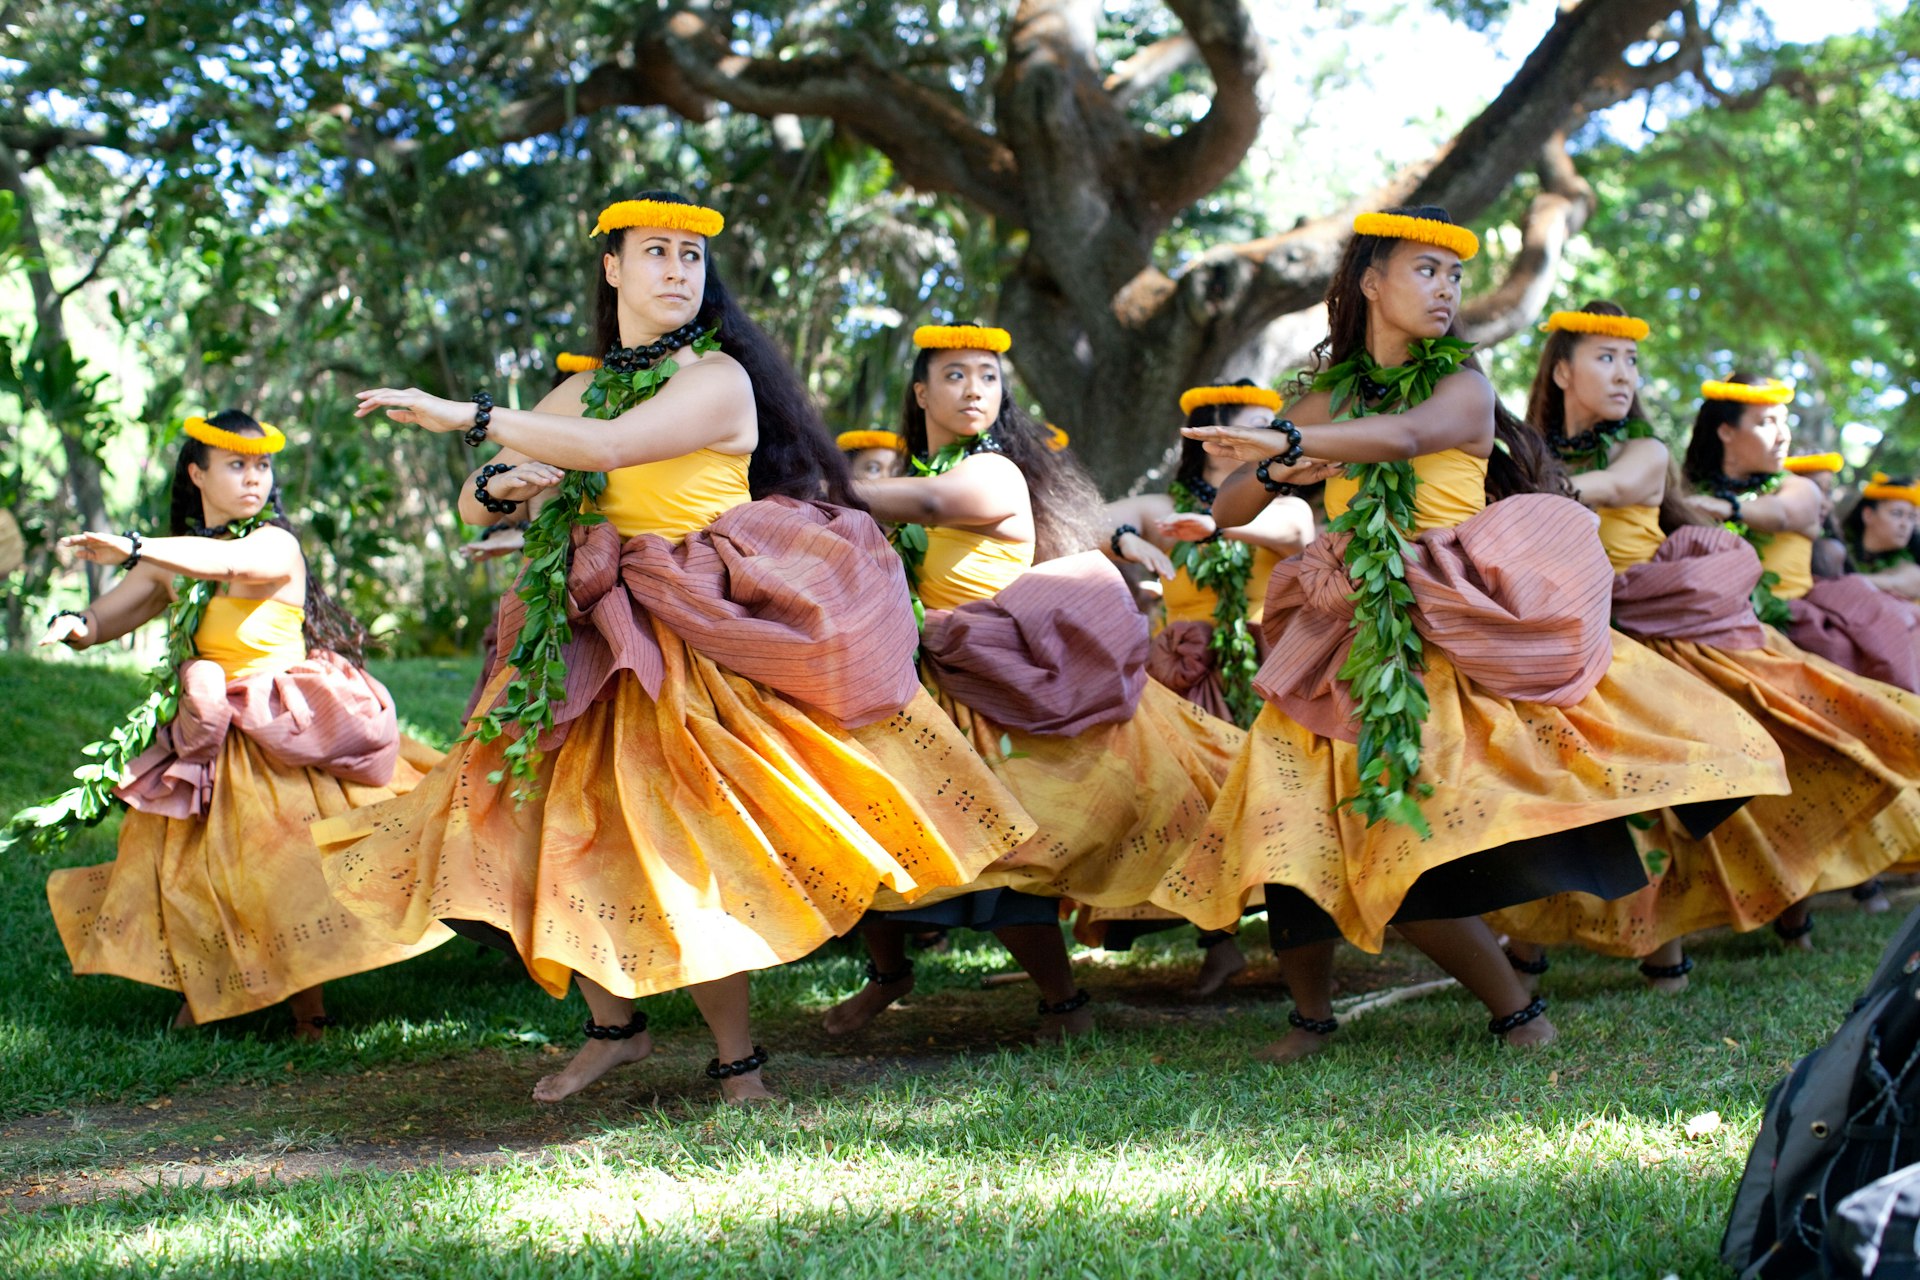 The Halau Na Mamo O Puuanahulu dance troupe performs at the Honolulu Hula Festival, summer of 2013 Honolulu Hawaii.